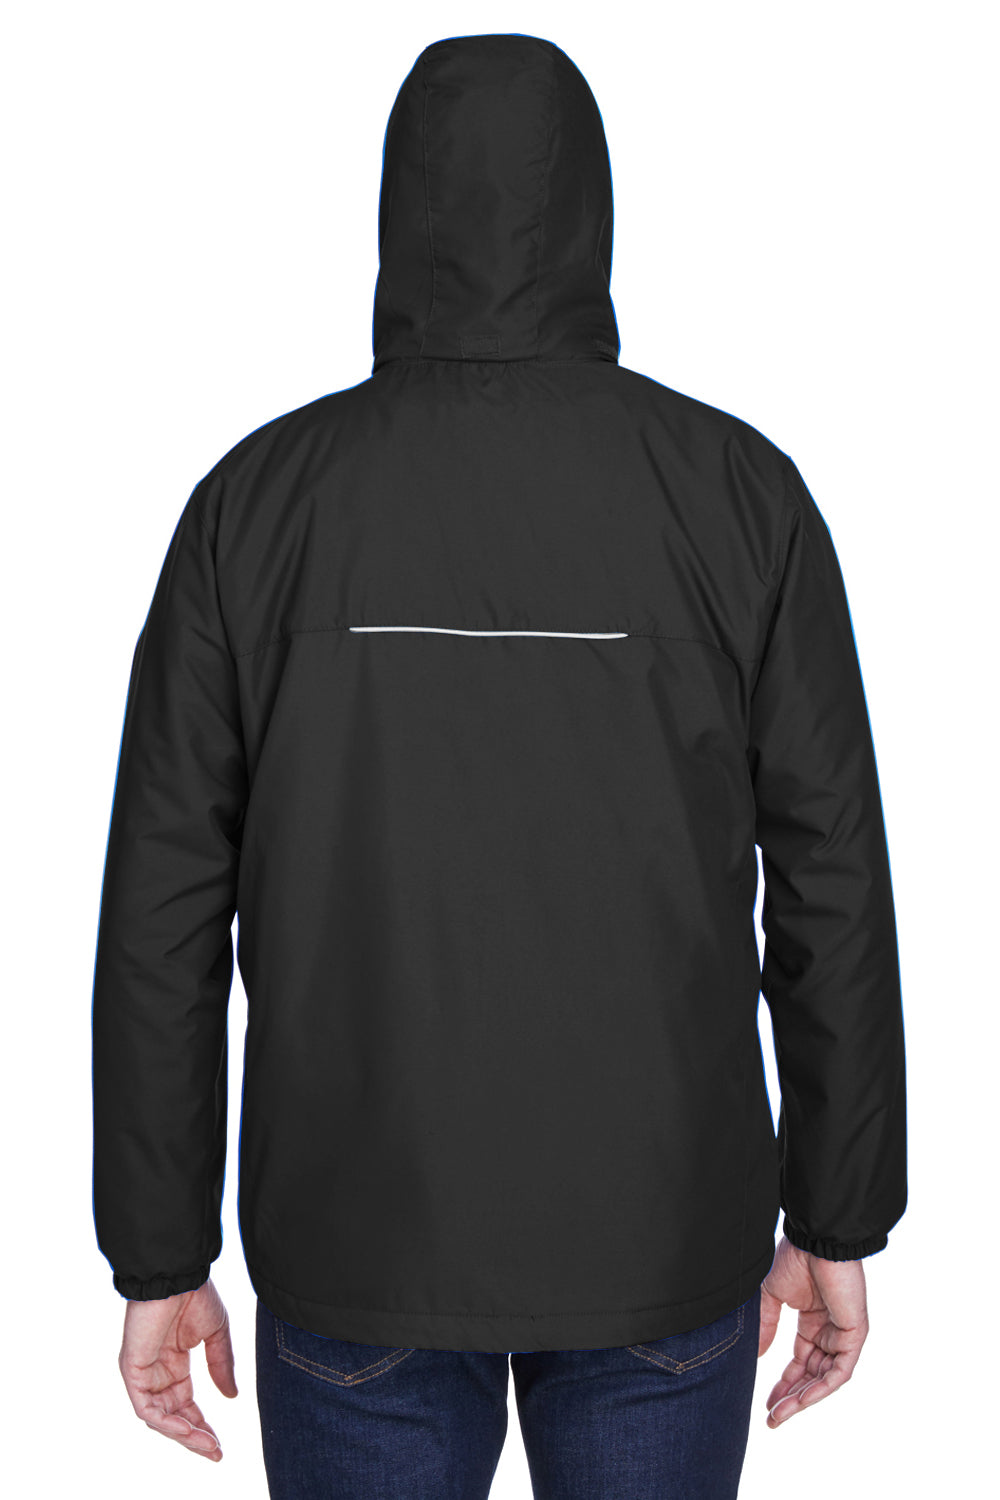 Core 365 88189 Mens Brisk Full Zip Hooded Jacket Black Back